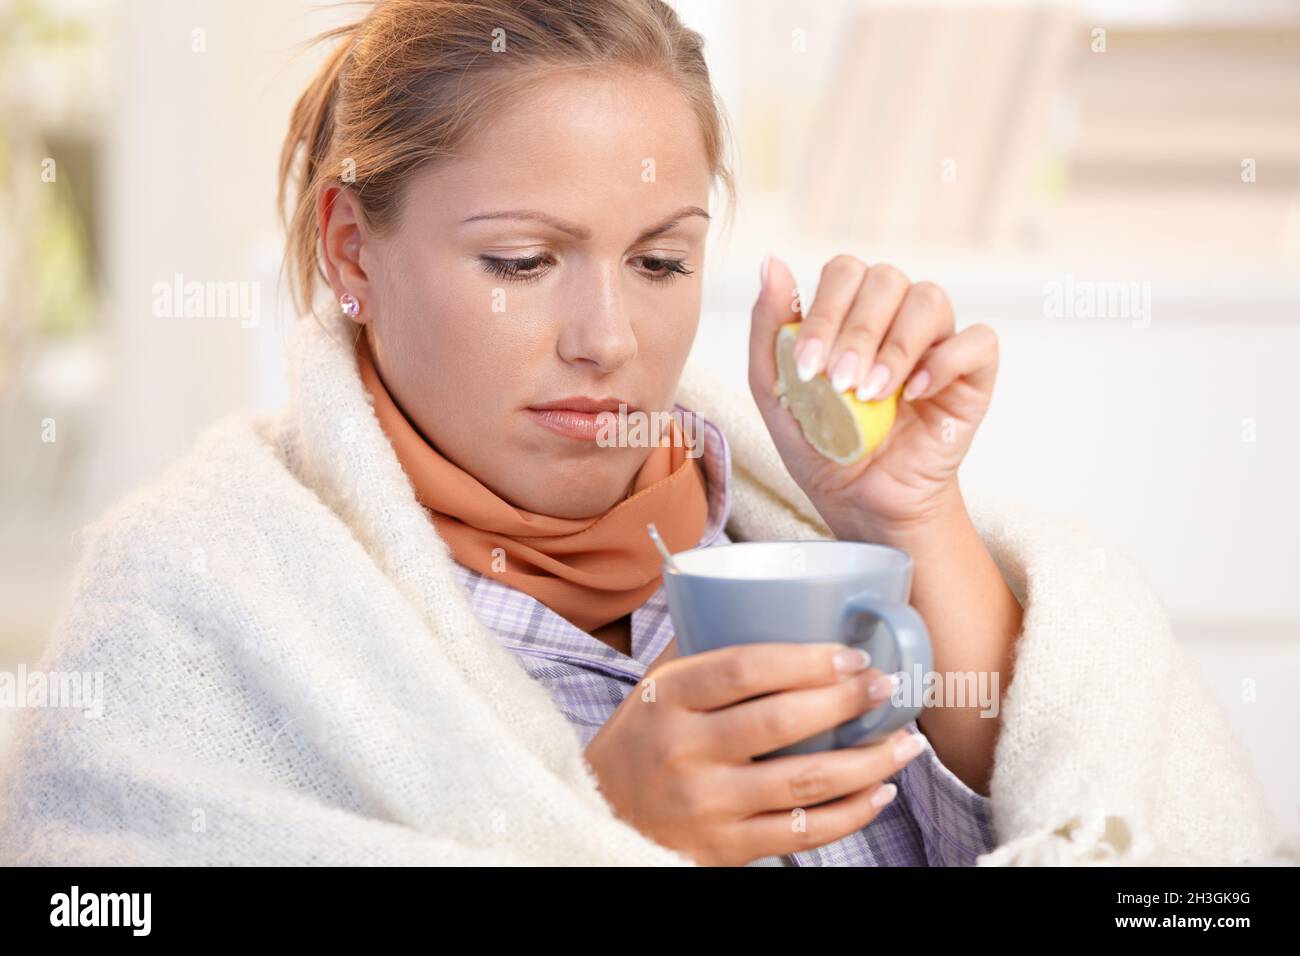 Junge Frau fing kalt trinken Tee Gefühl schlecht Stockfoto